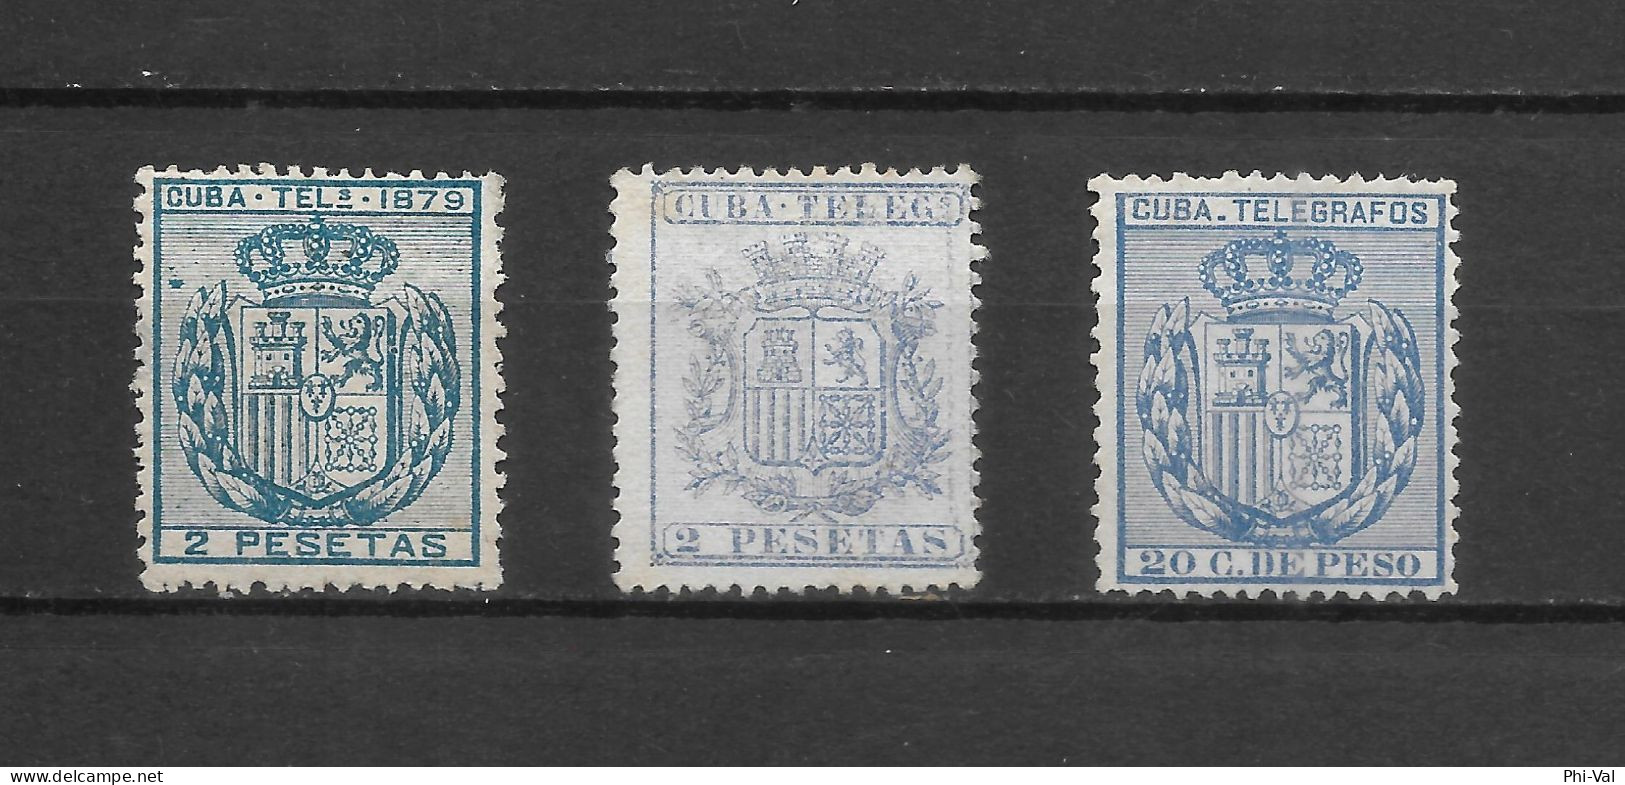 (LOT349) Cuba Telegraph Stamps. 1875-1896. VF MLH - Telegraph